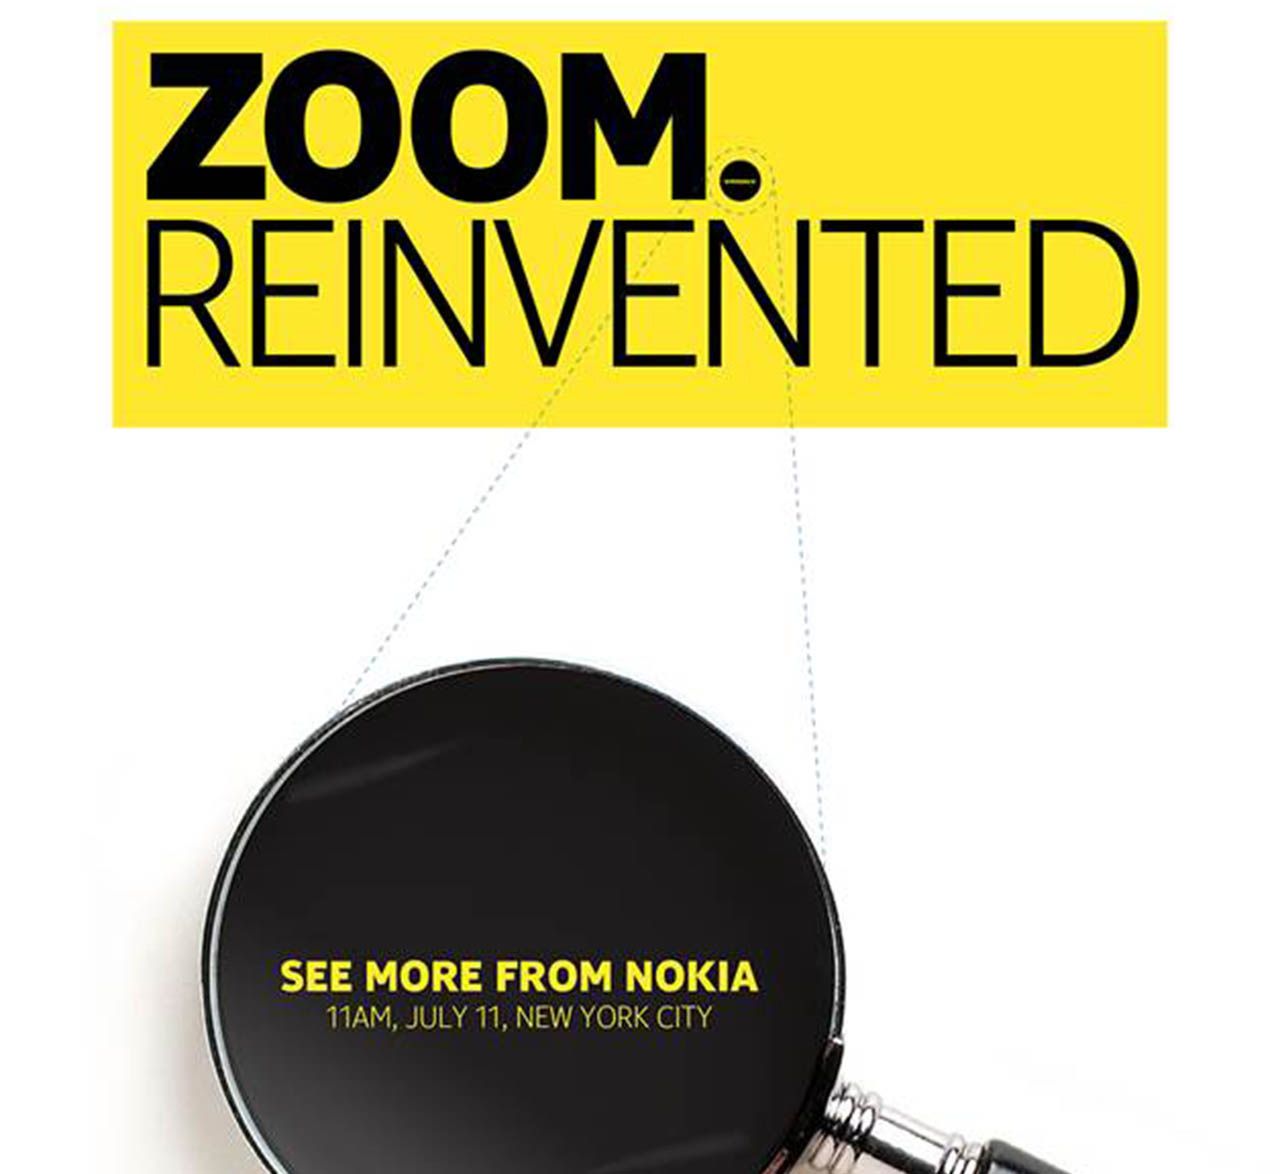 nokia invite promises zoom reinvented on 11 july eos unveil  image 1